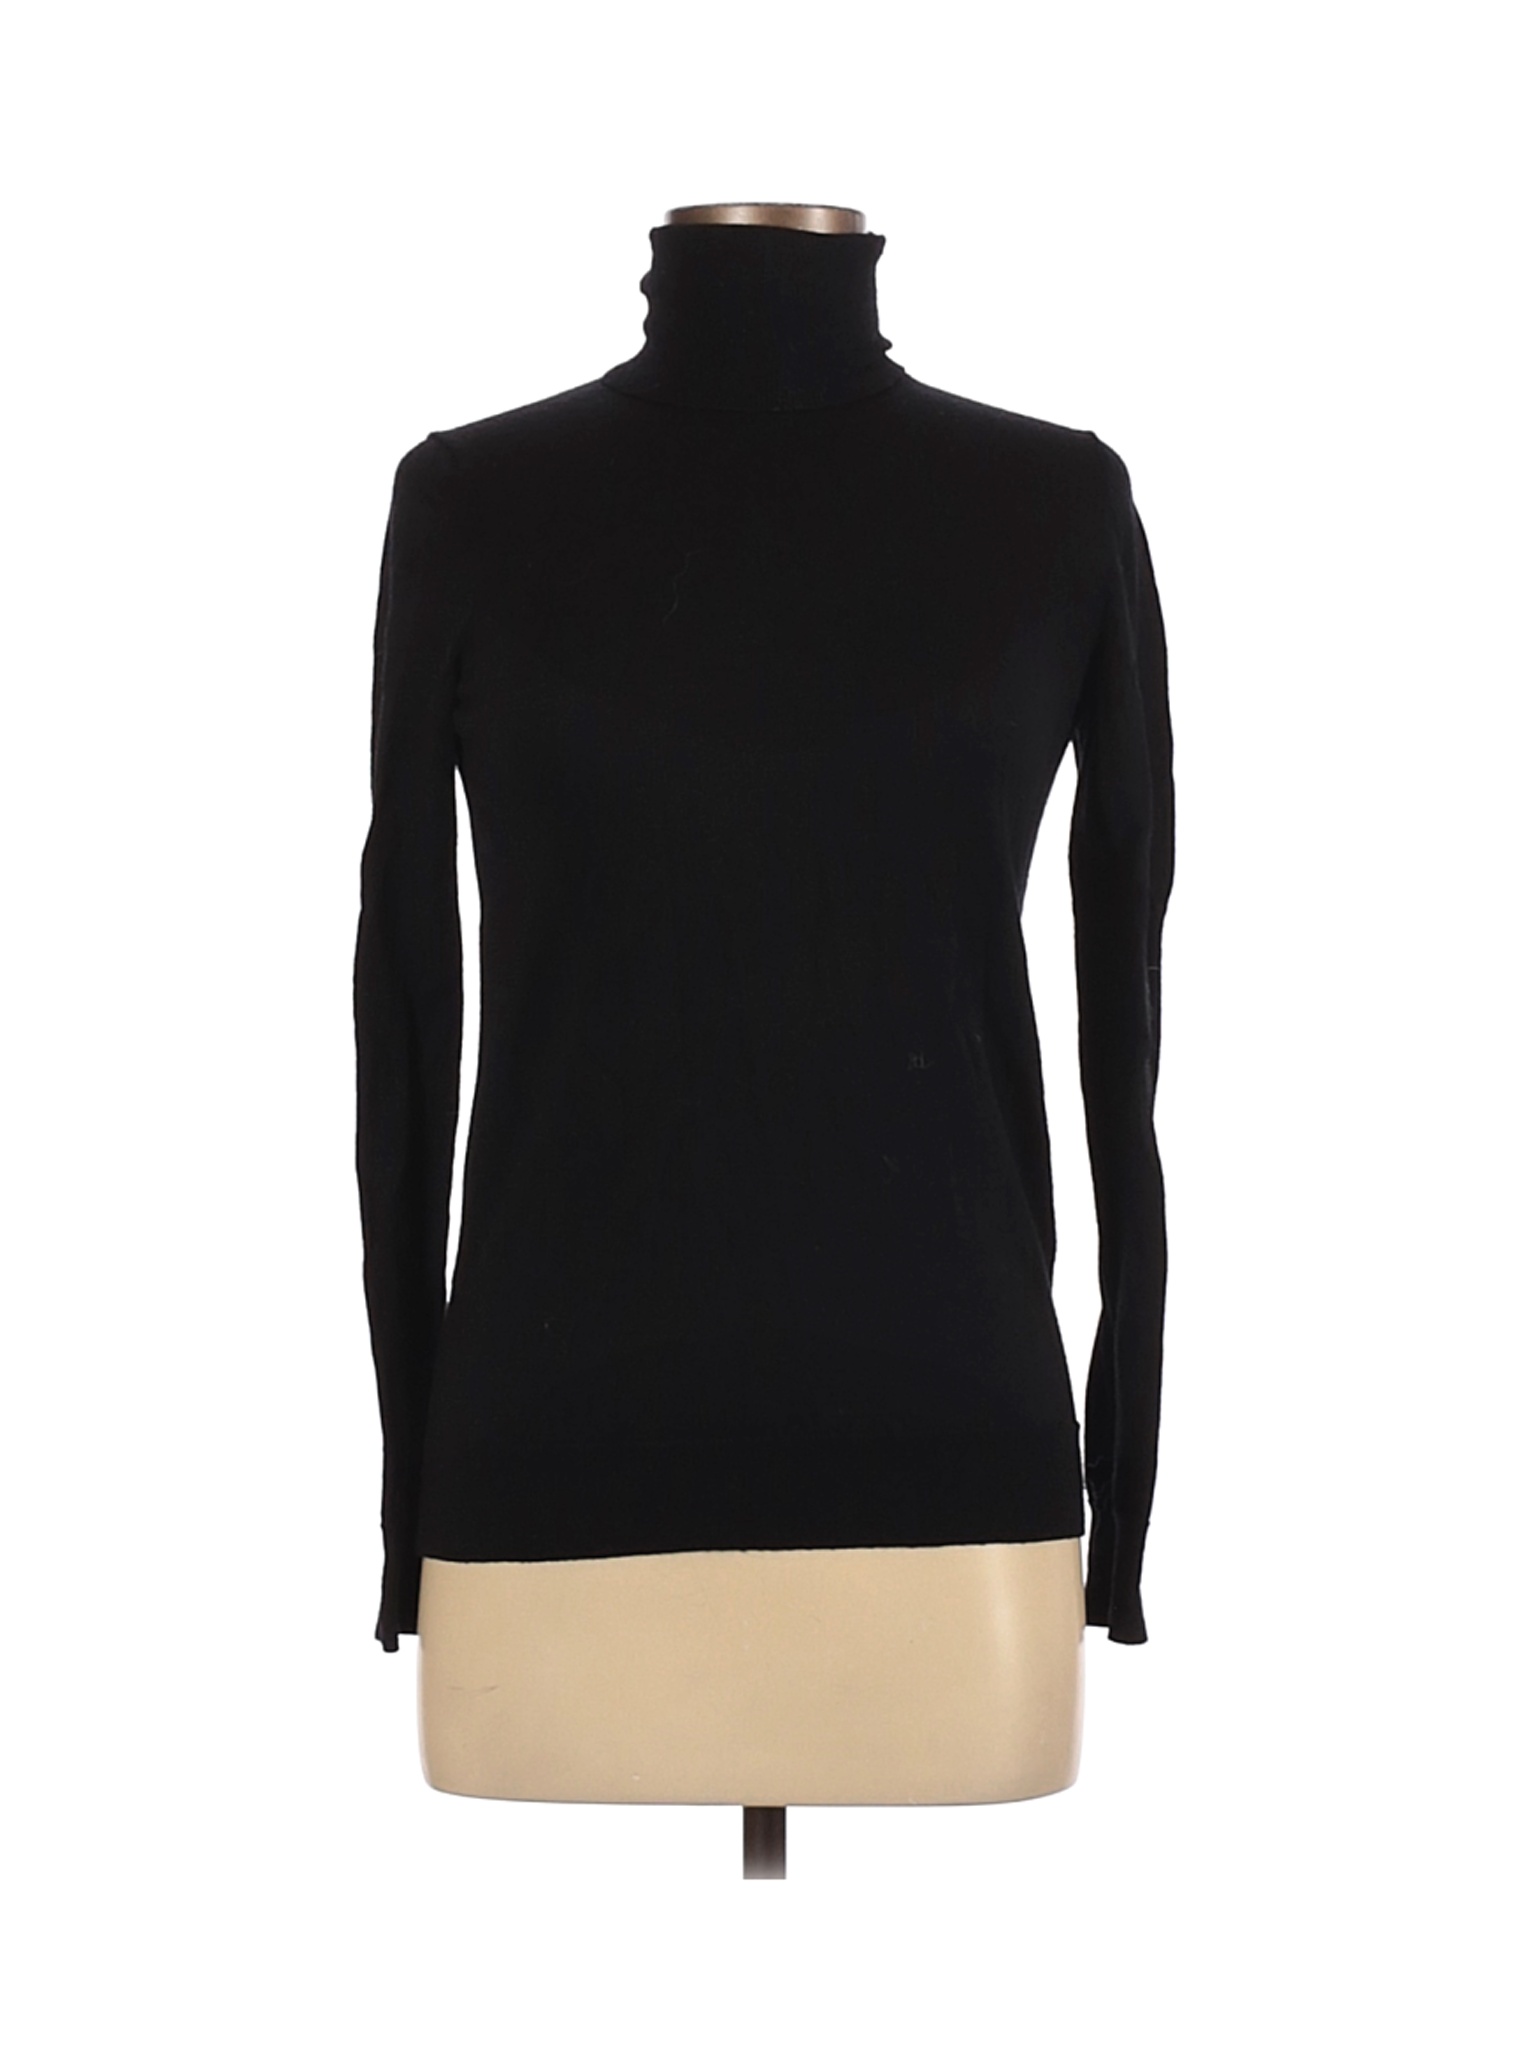  Uniqlo  Women Black Turtleneck  Sweater M eBay